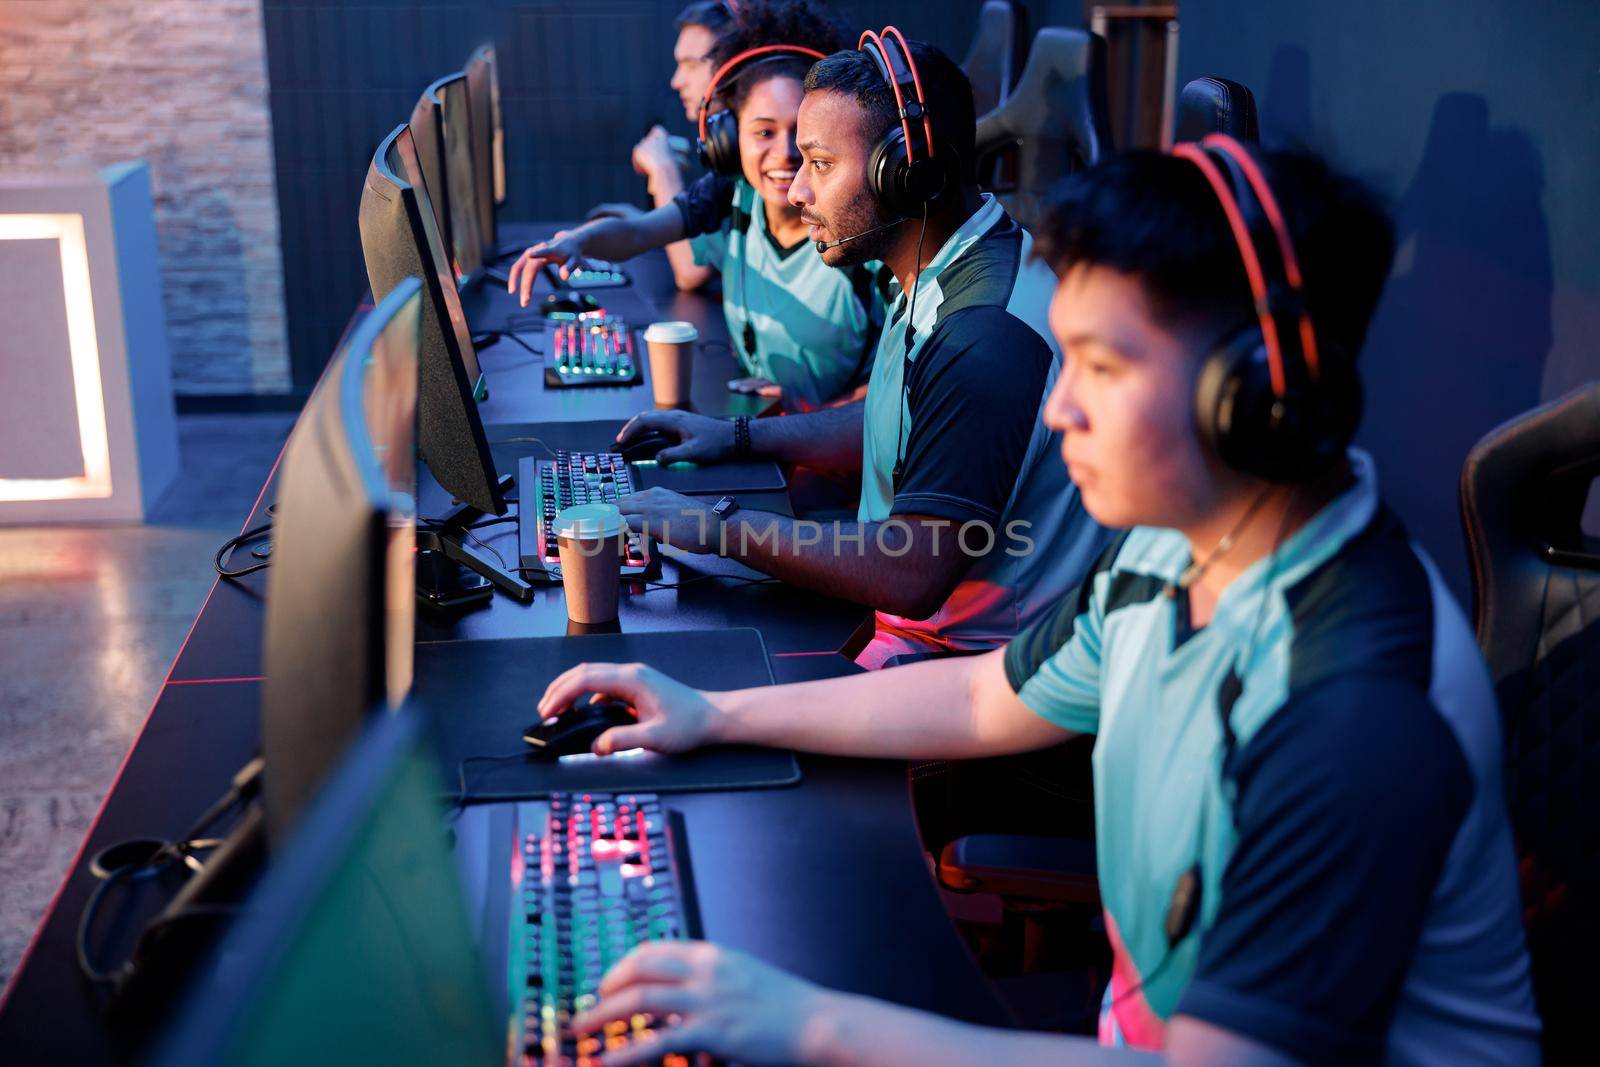 Cybersport team involved in online tournament in gaming club by Yaroslav_astakhov